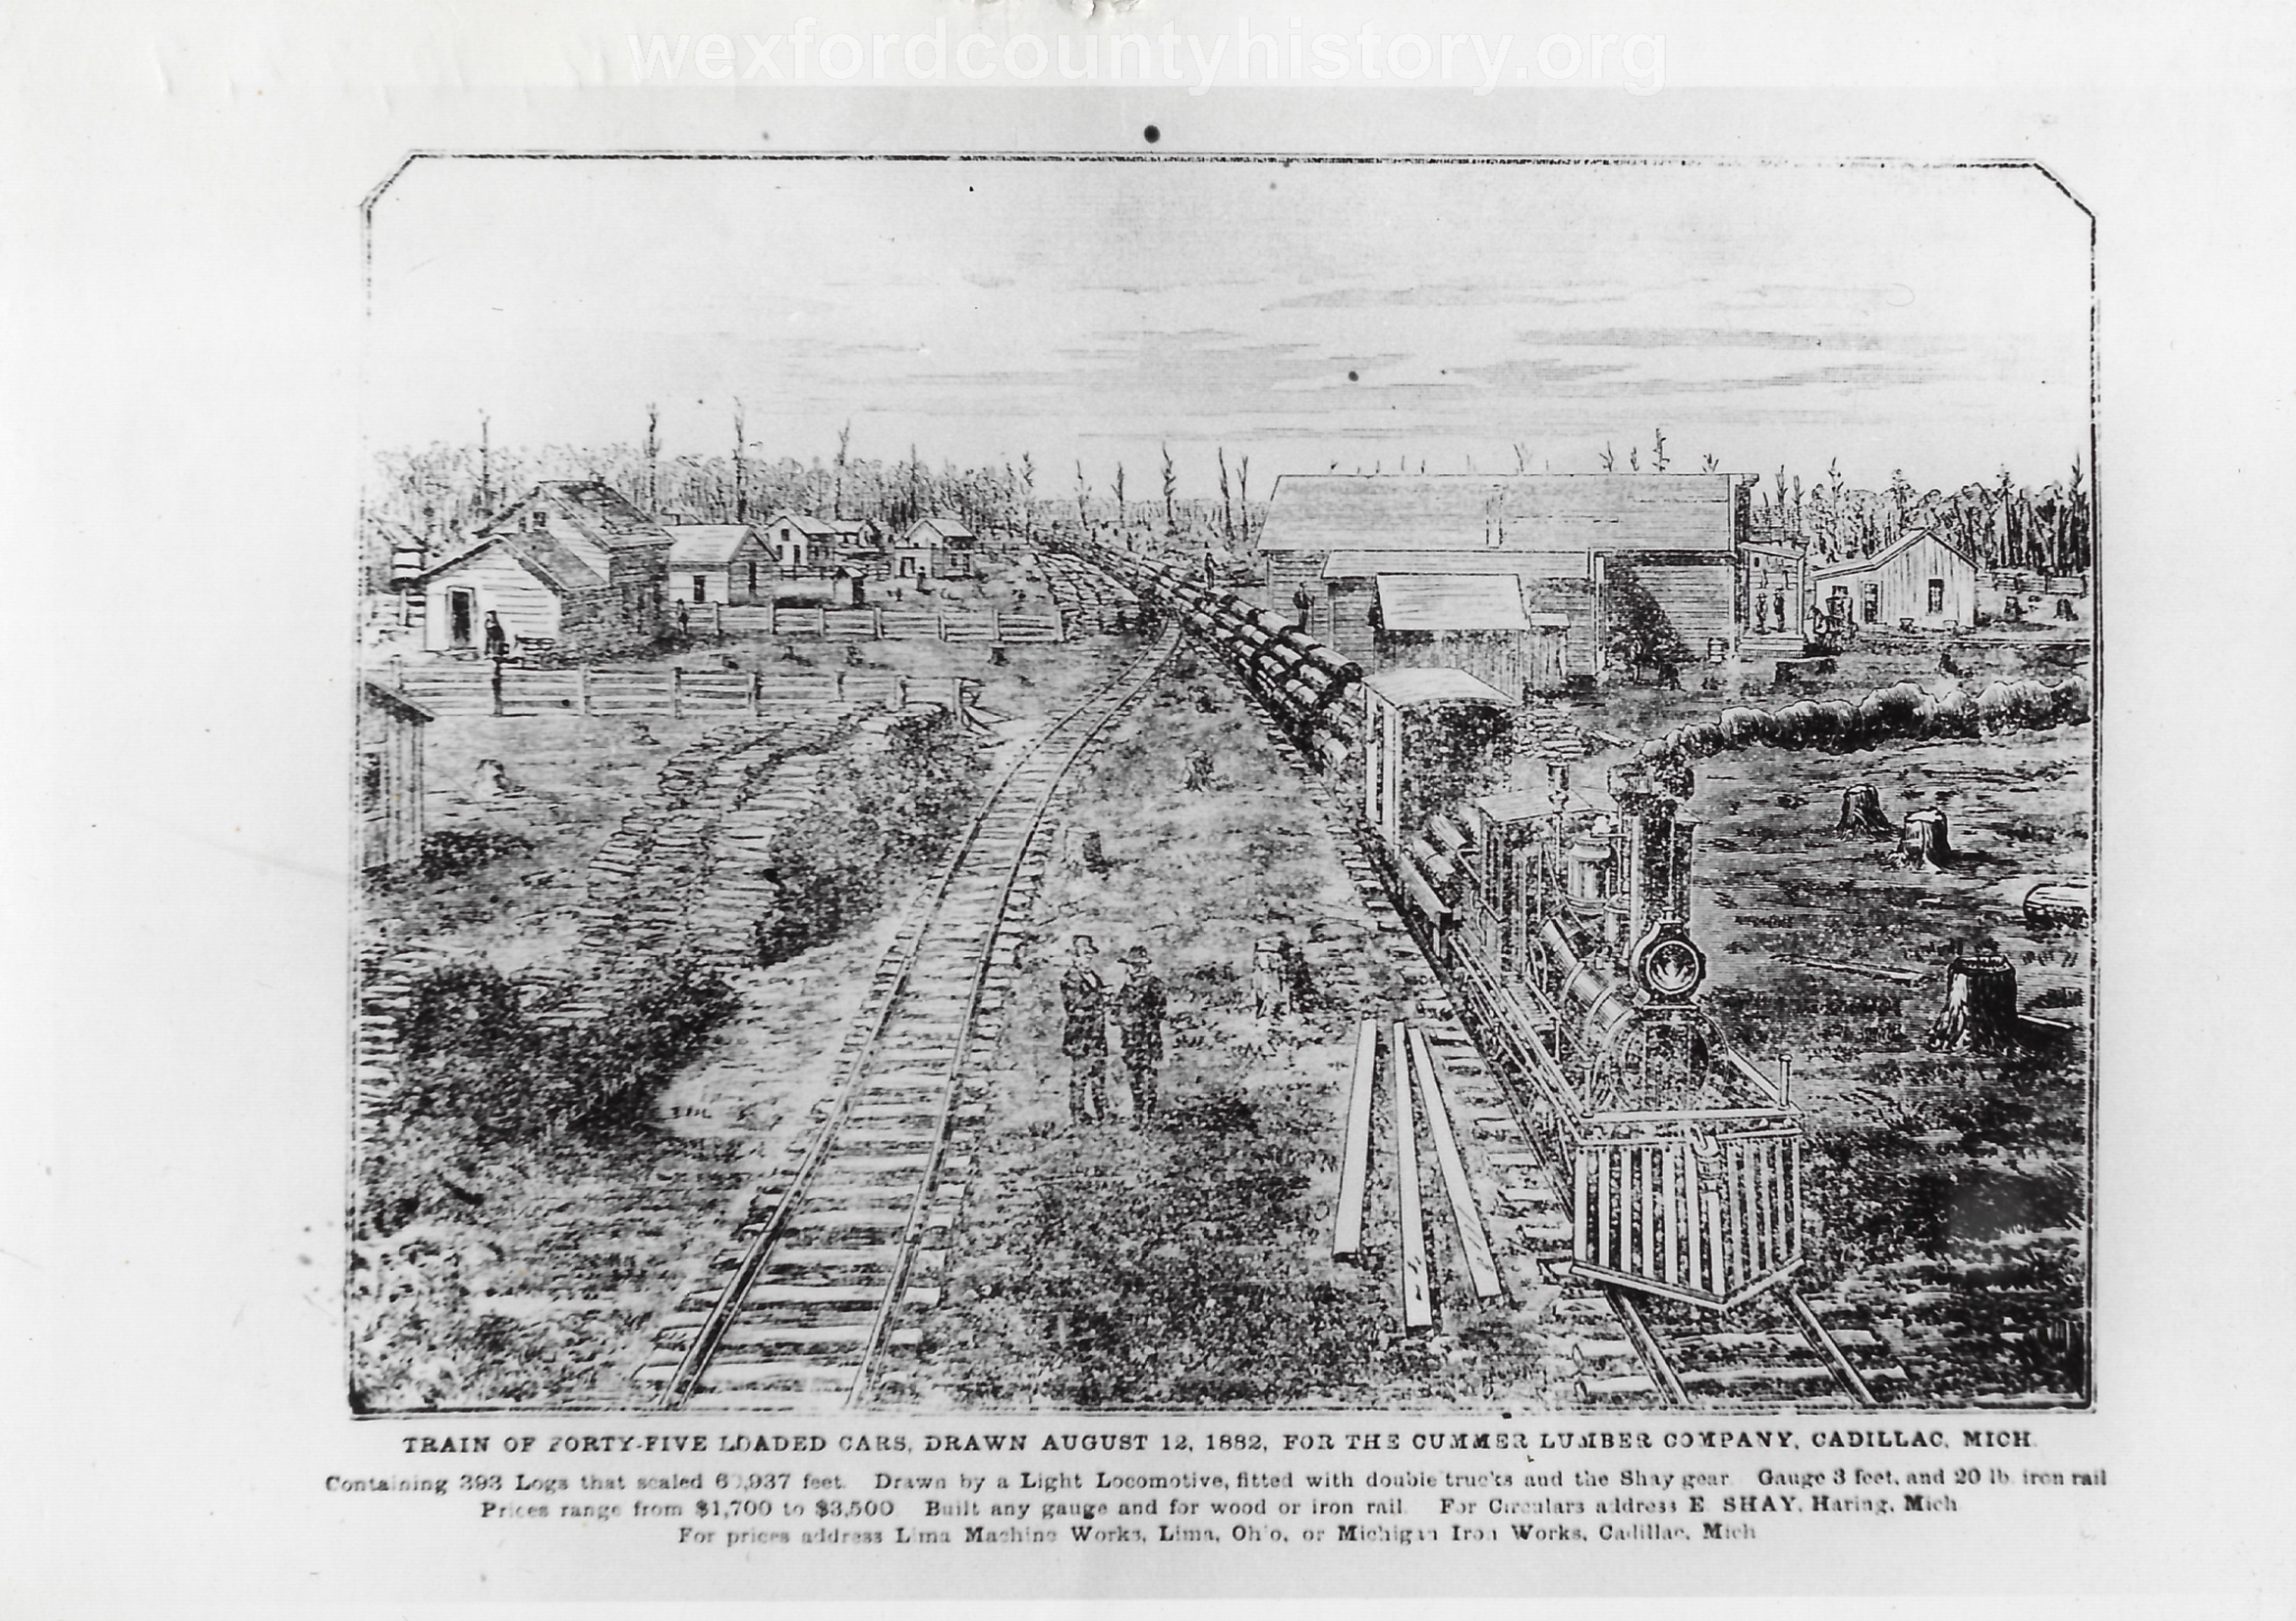 Cummer Lumber Company , 1882